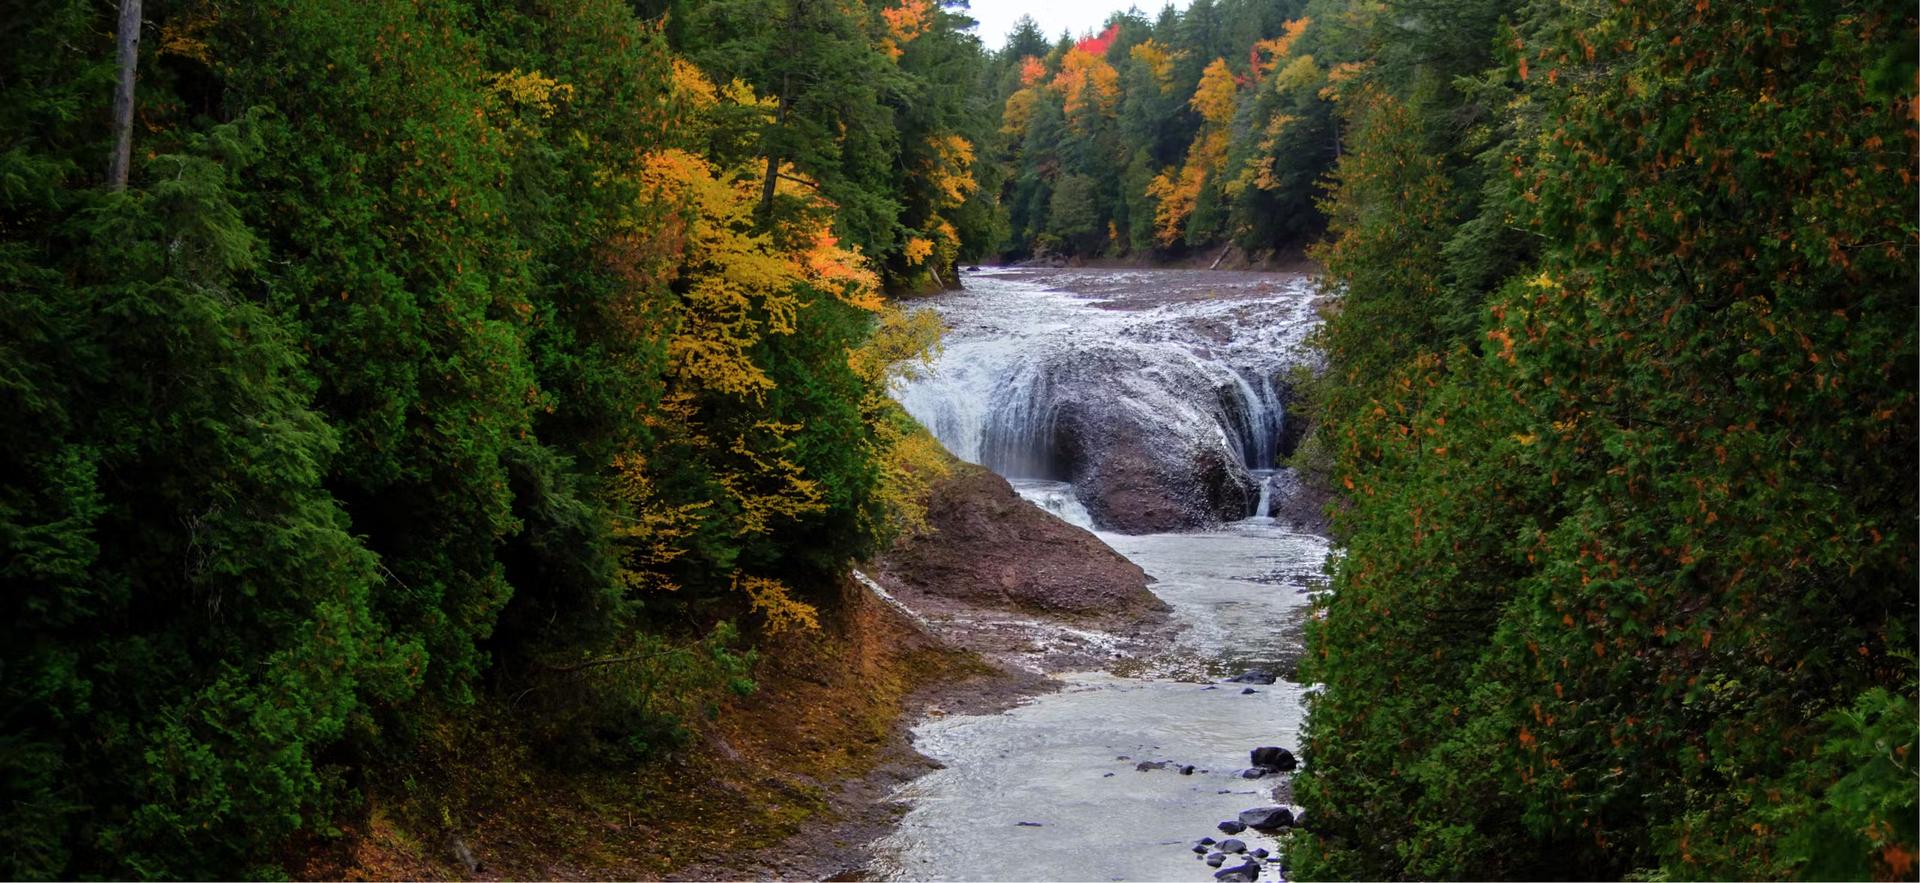 Potawatomi Falls In The Ottawa National Forest In Michigan's Upper Peninsula.